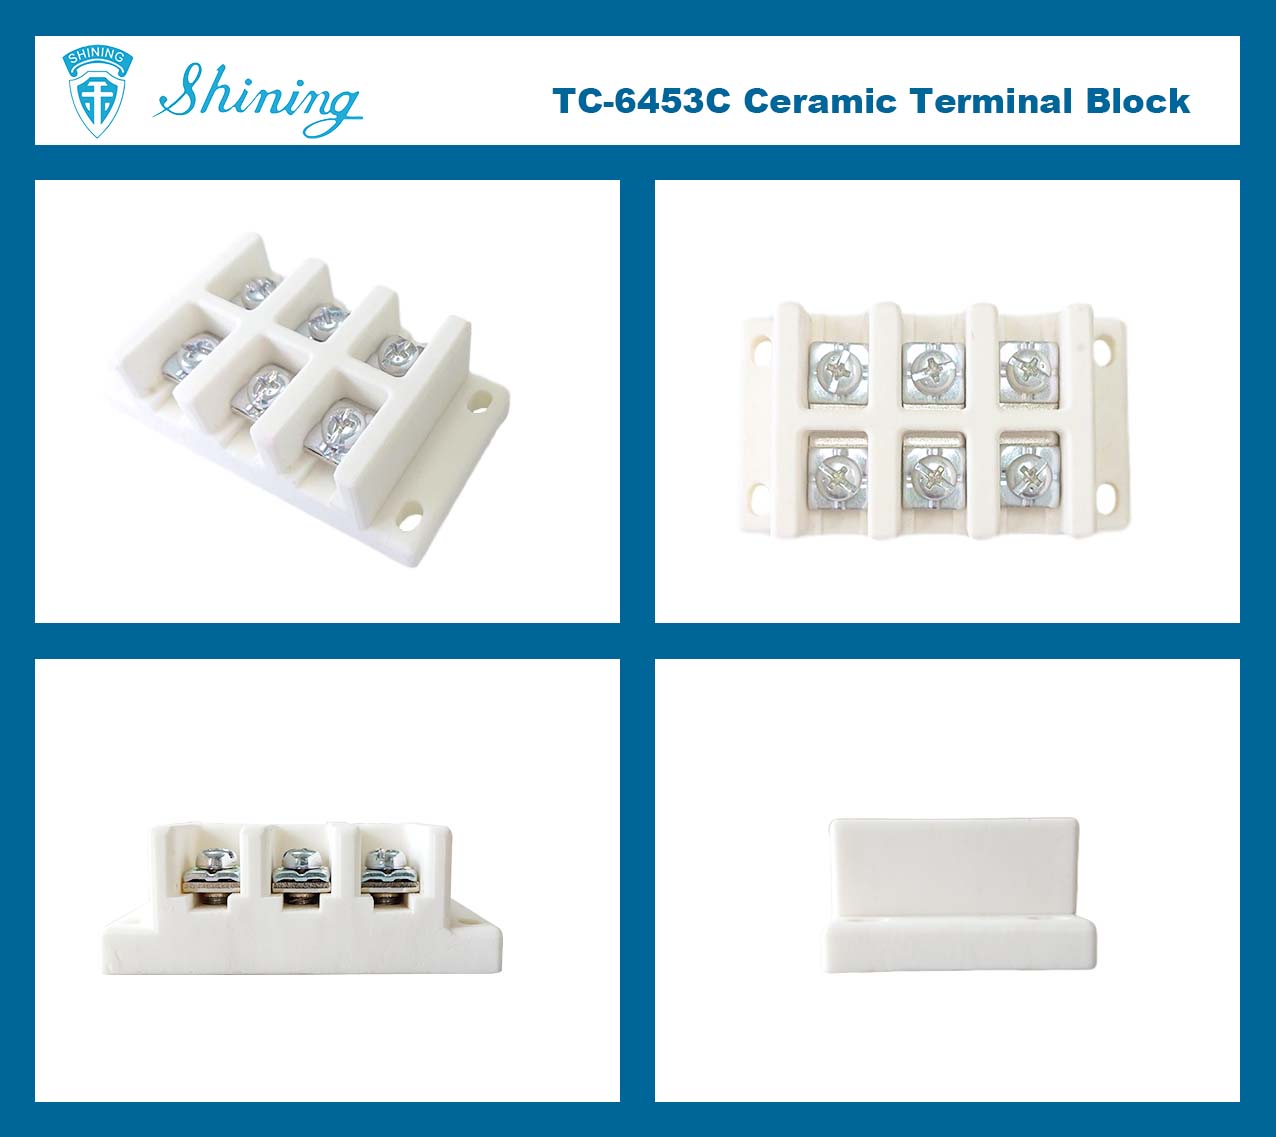 @$600V_30A_Terminal_Block$@TC-6453C_&lt;TC-6453C Panel Montajlı 600V 45A 3 Kutuplu Seramik Terminal Blok&gt;